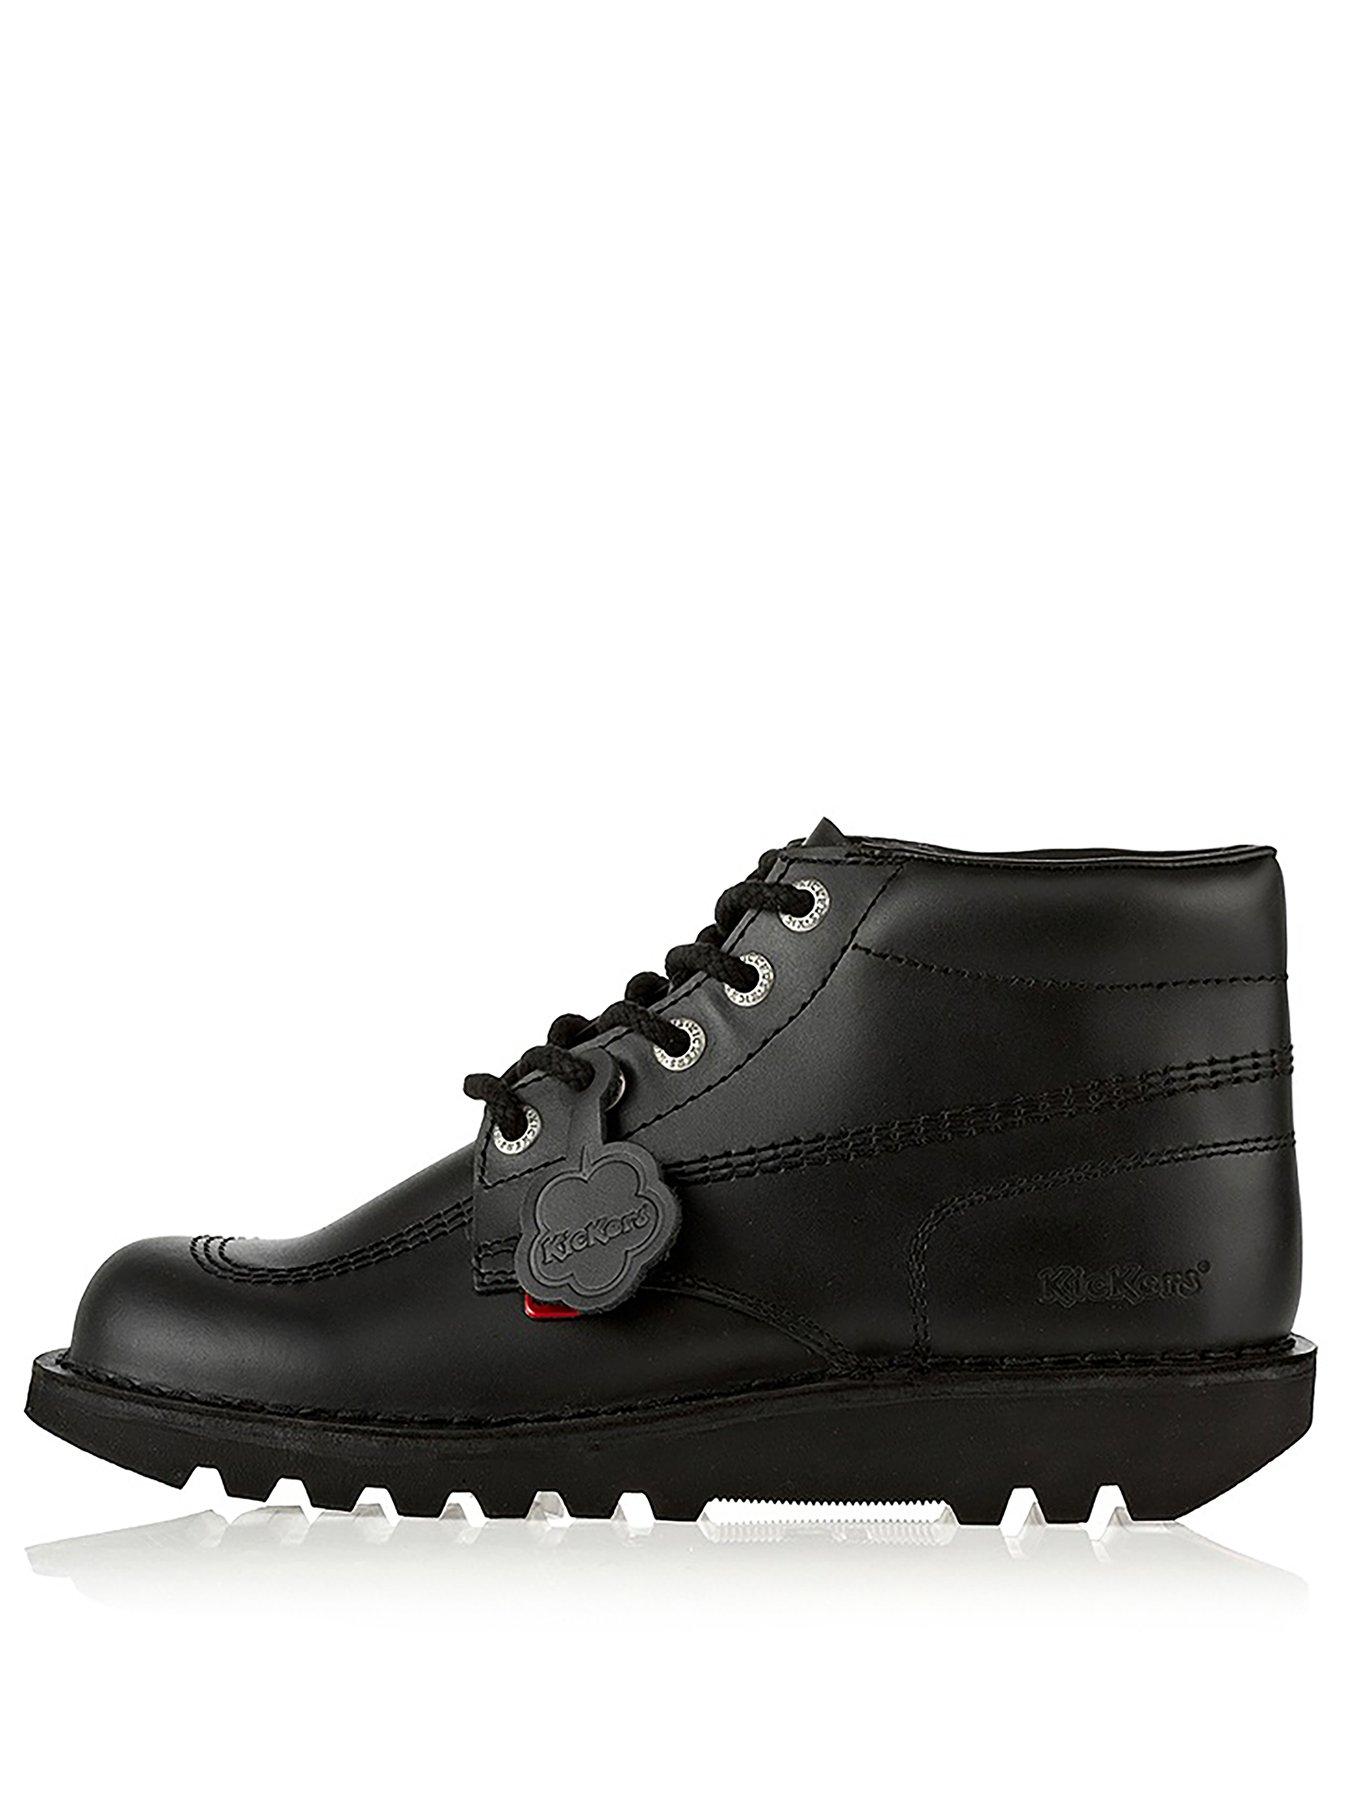 Kickers Kick Hi Core Men Leather Red Hi Top Boots Size UK 6 - 12